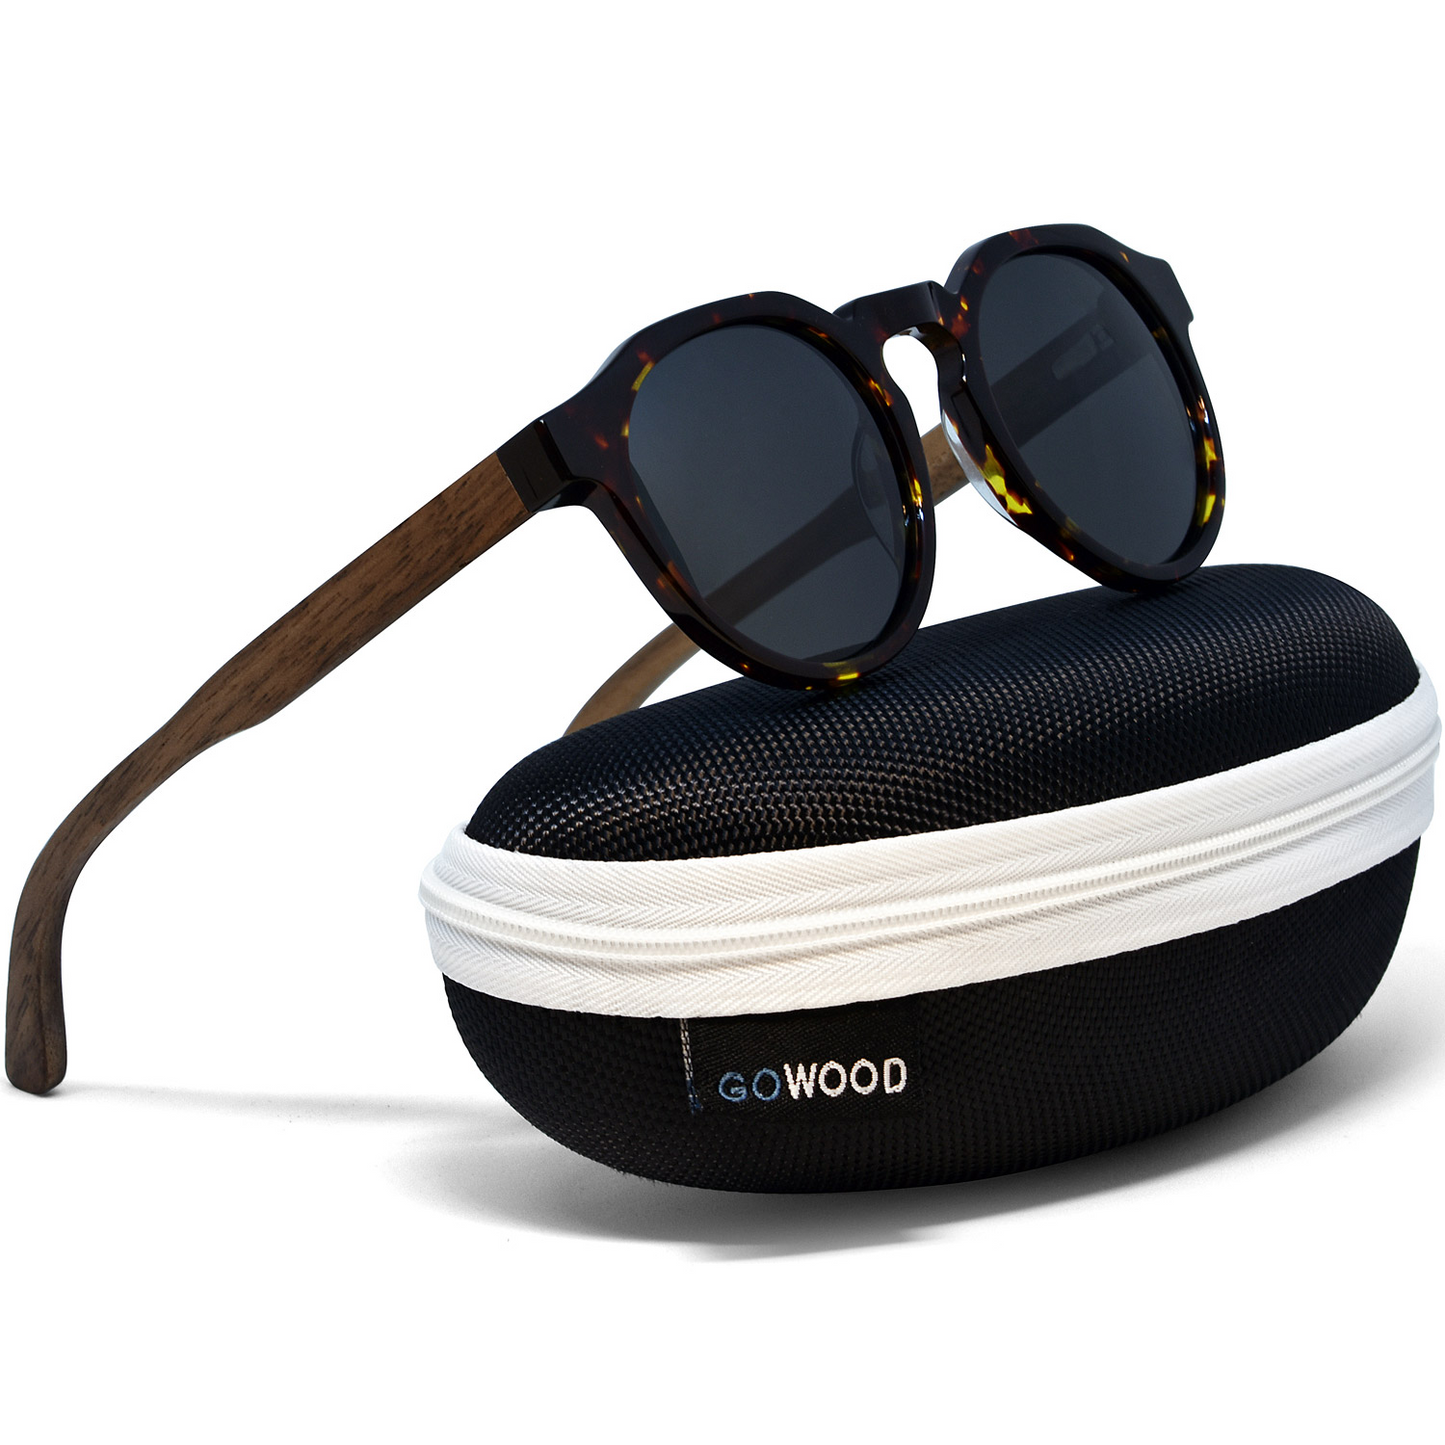 Walnut wood panto sunglasses with tortoise frame and black polarized lenses